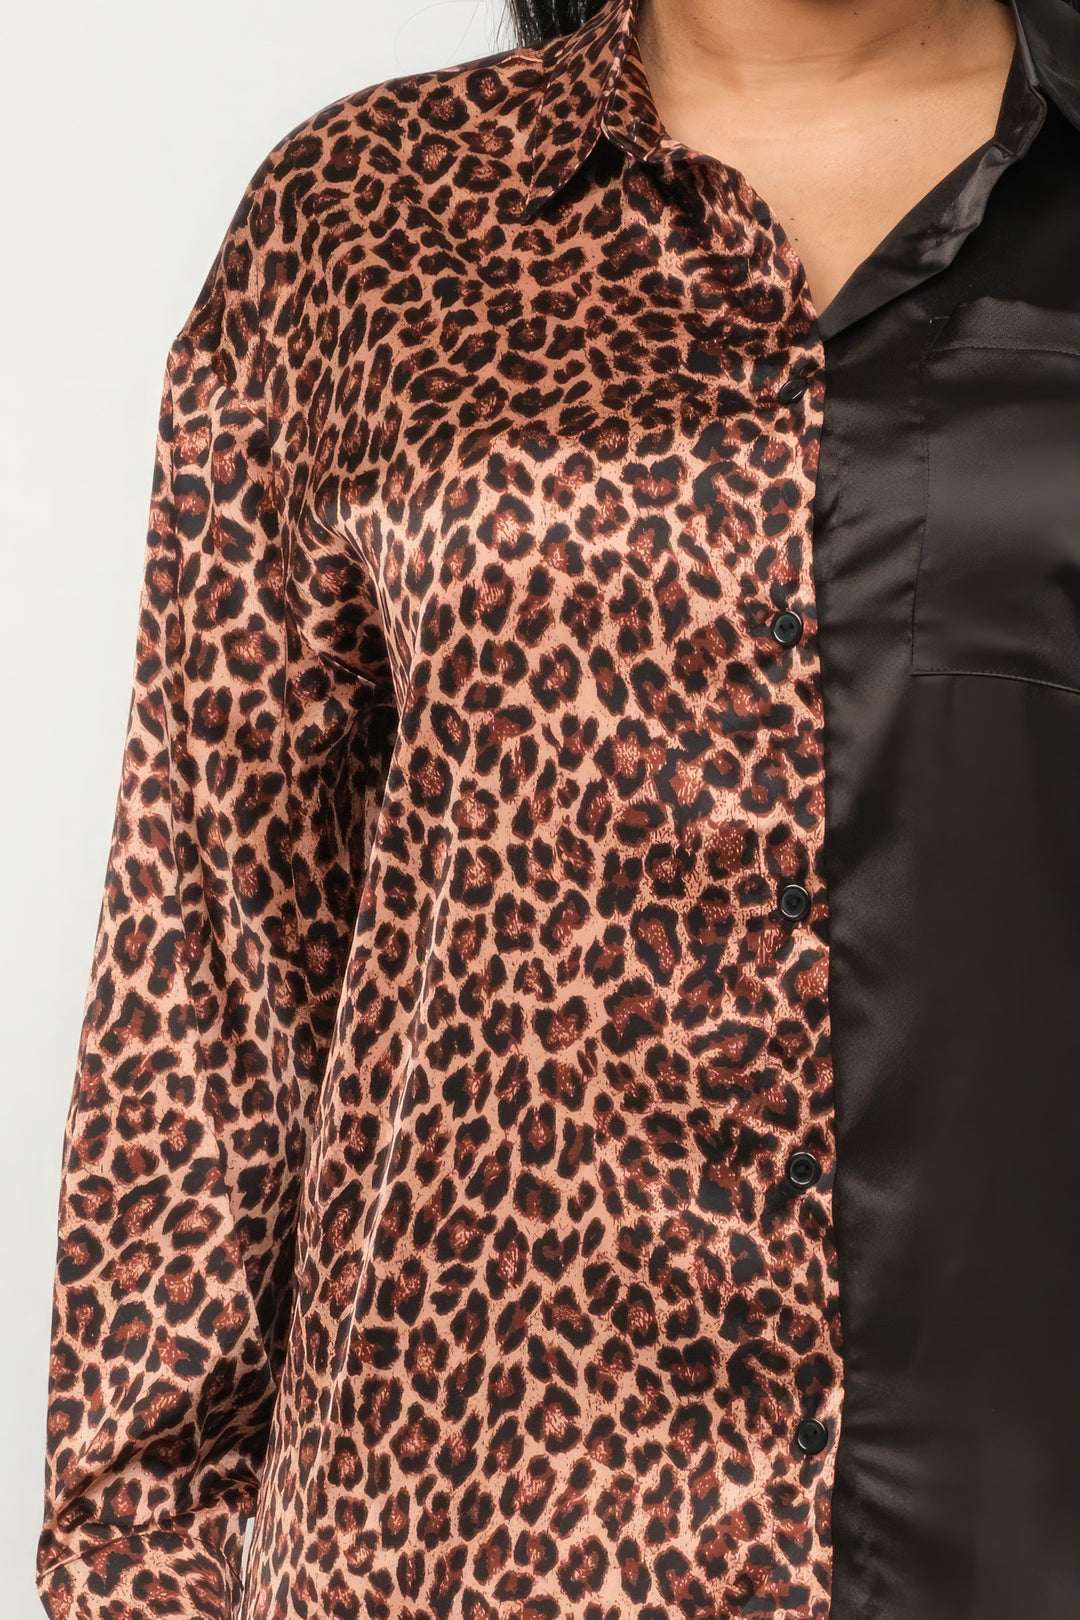 Animal Print Elegance: 2-Piece Collared Long Sleeve Top And Pants Set